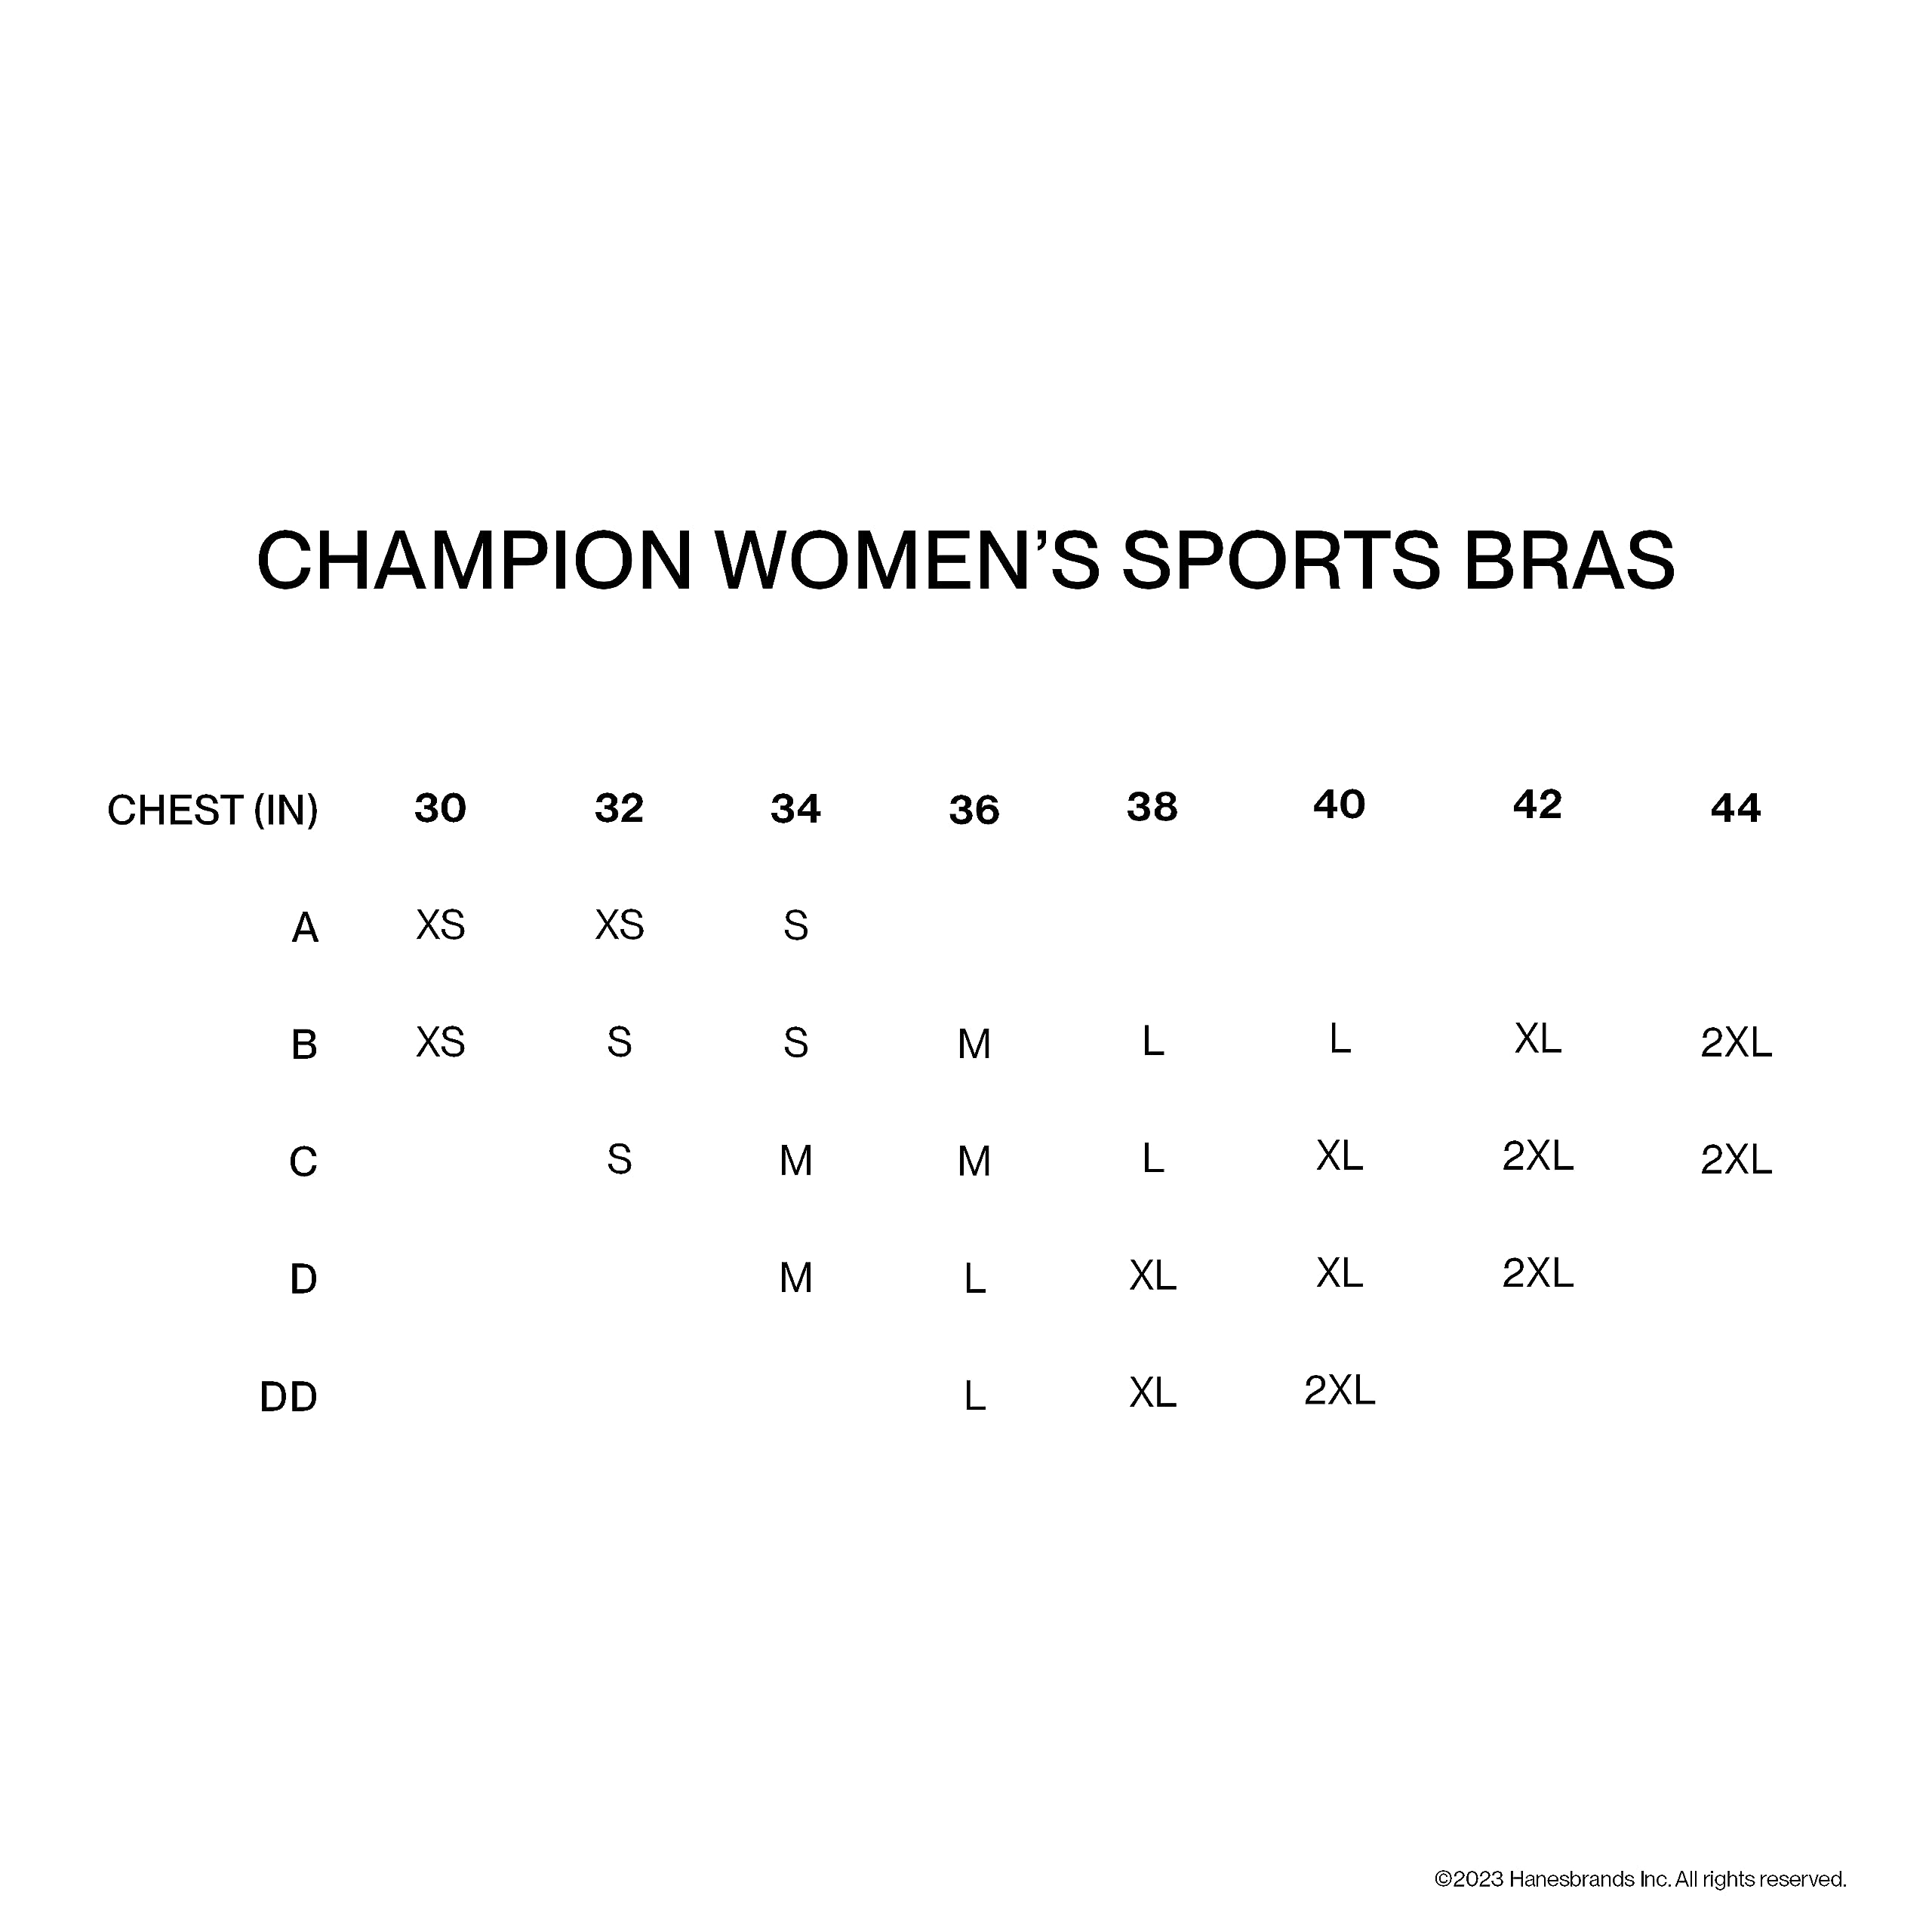 Champion Women's Sports Bra, Absolute, Maximum Support, High-Impact Sports Bra for Women